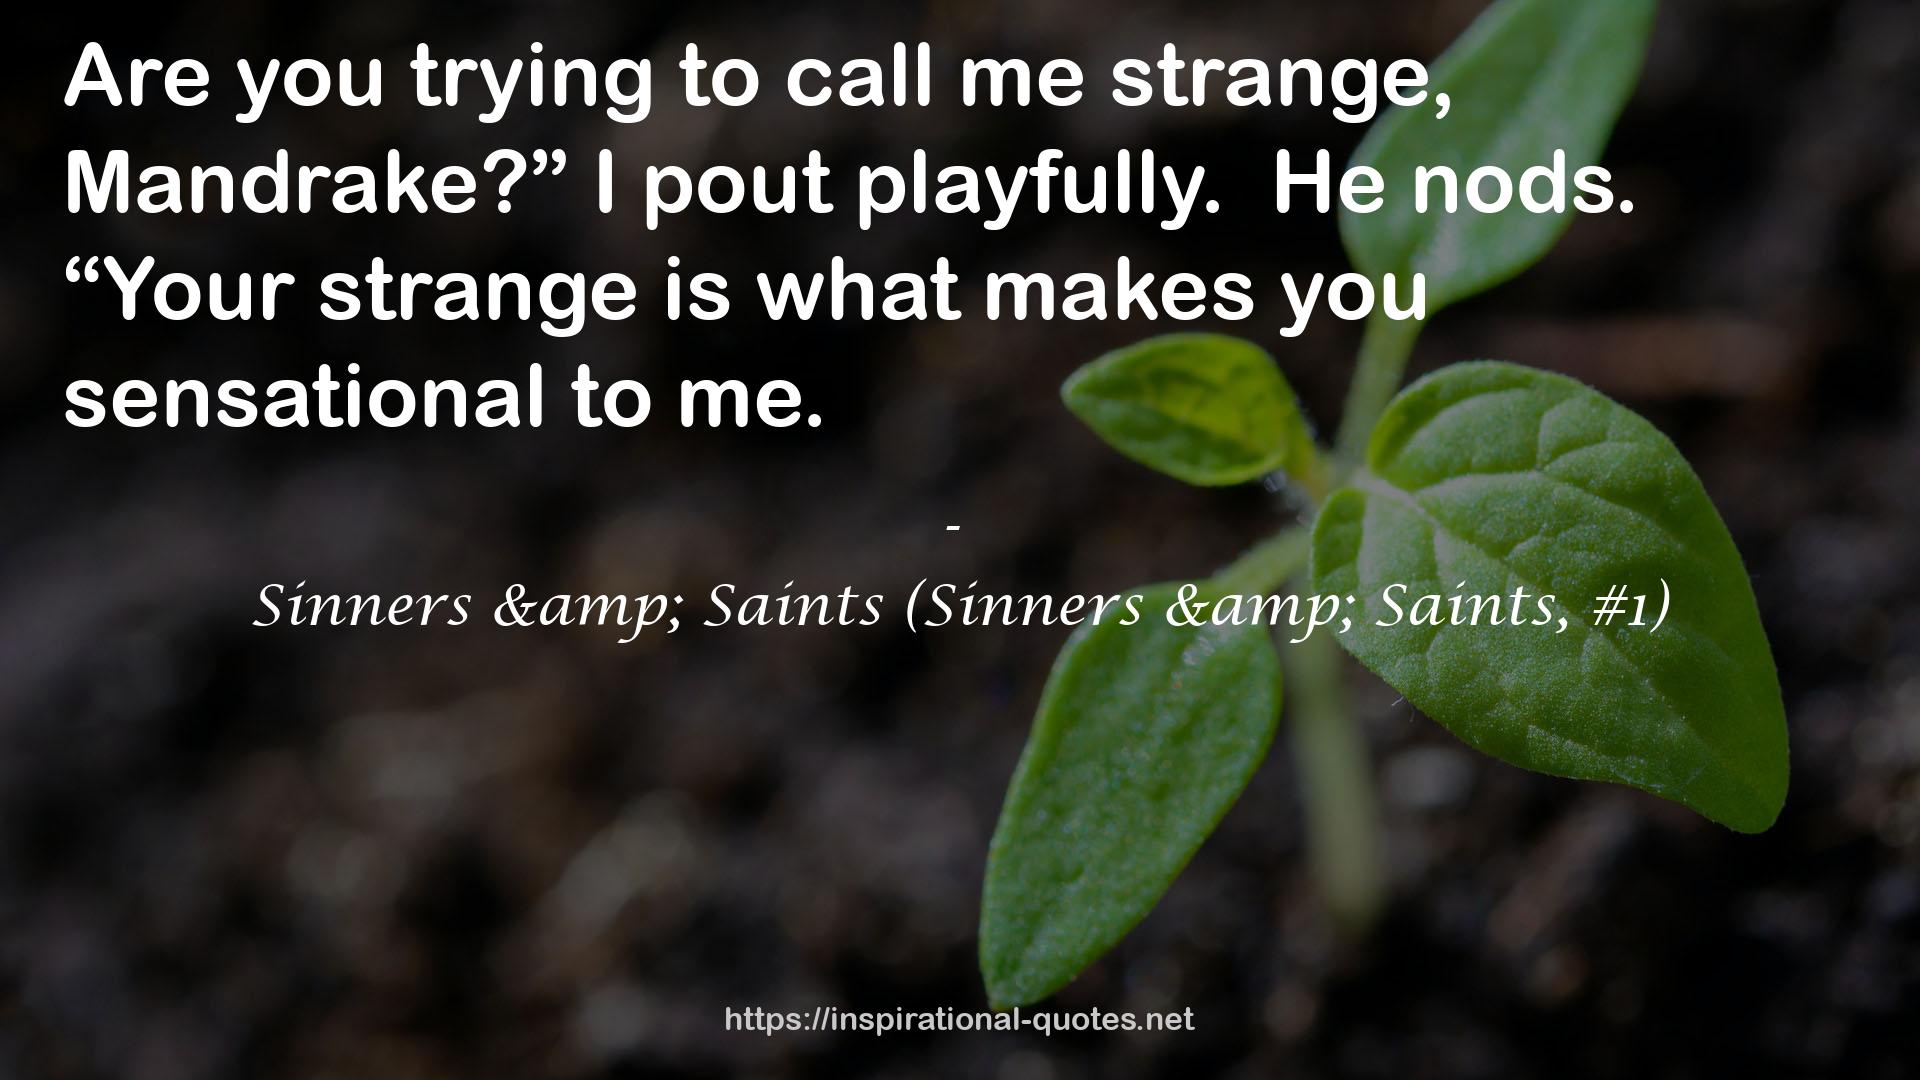 Sinners & Saints (Sinners & Saints, #1) QUOTES